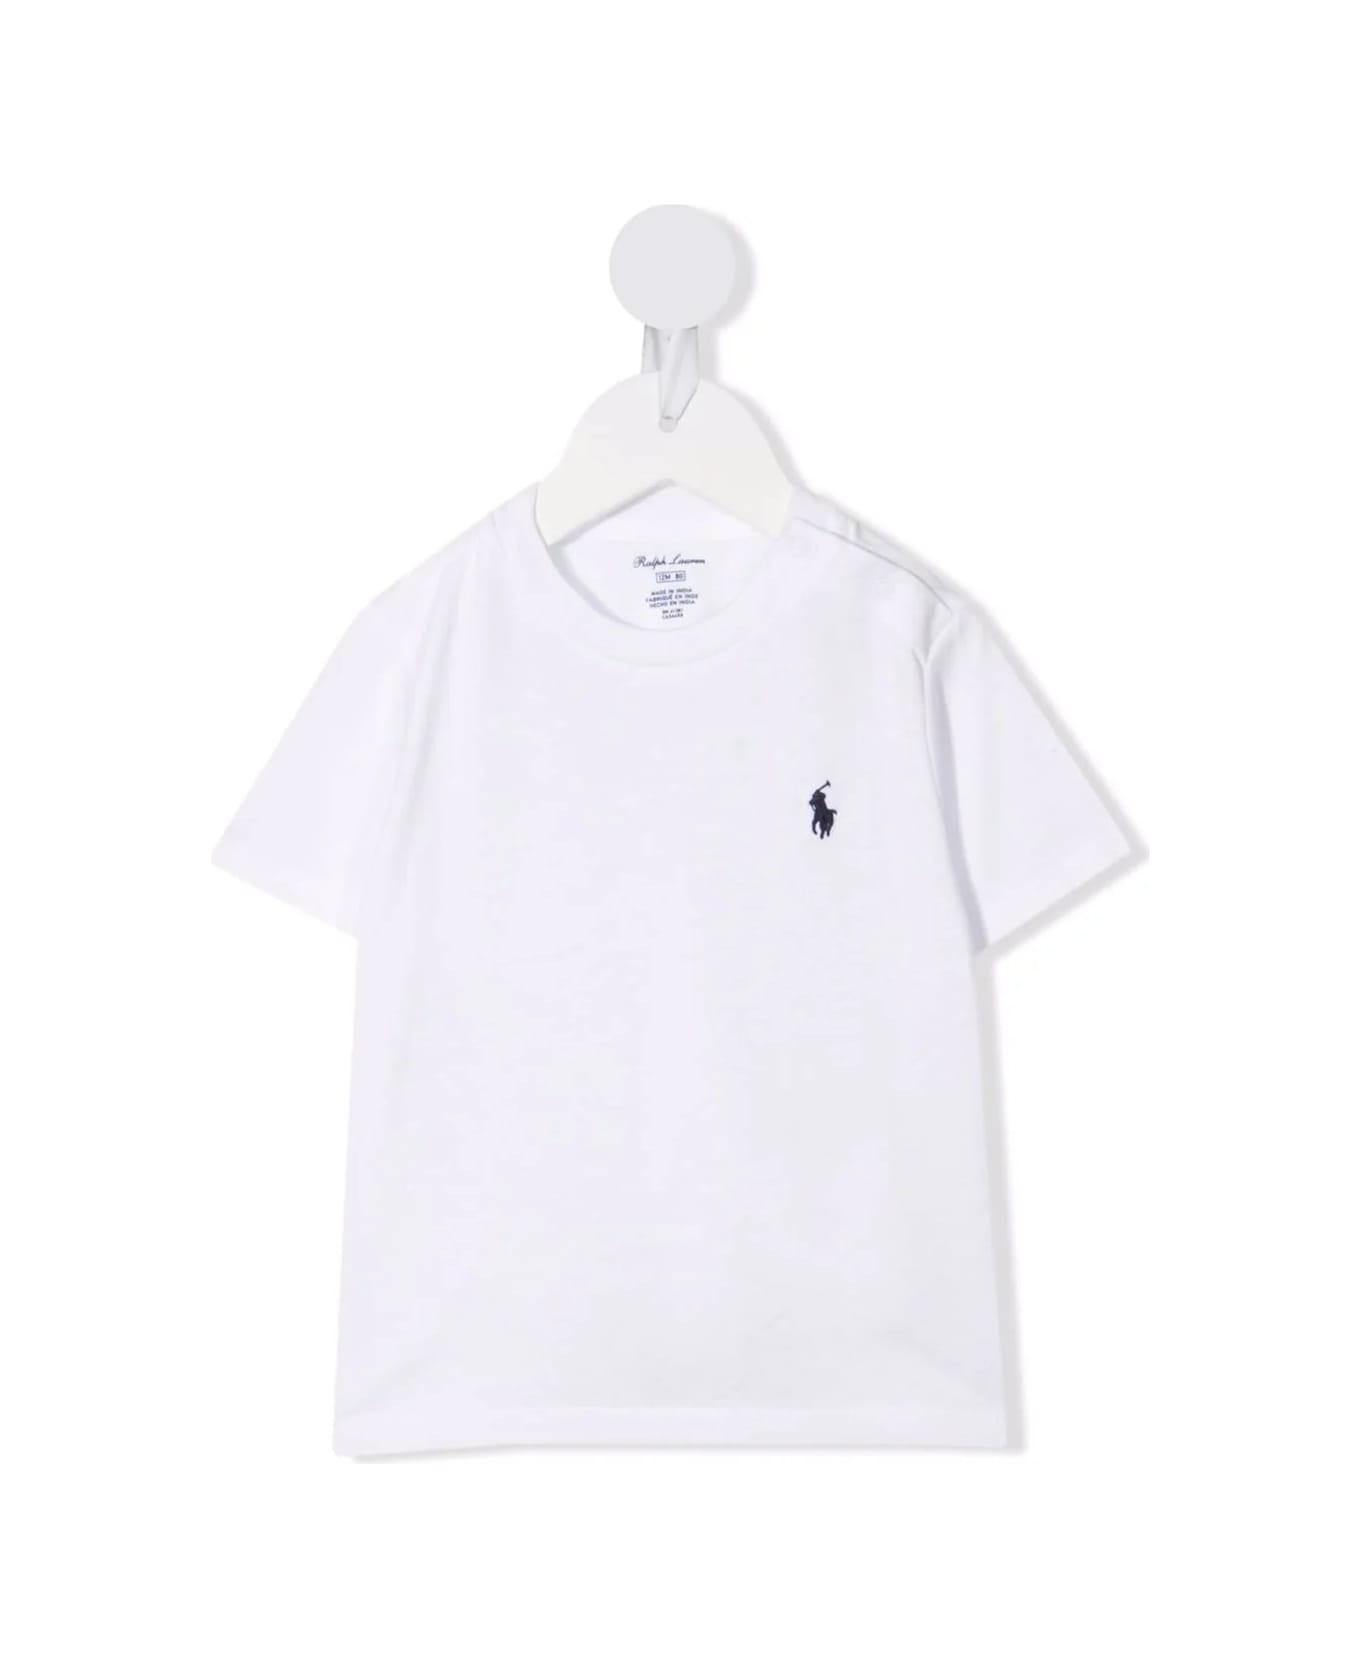 Ralph Lauren Baby White T-shirt With Navy Blue Pony - WHITE